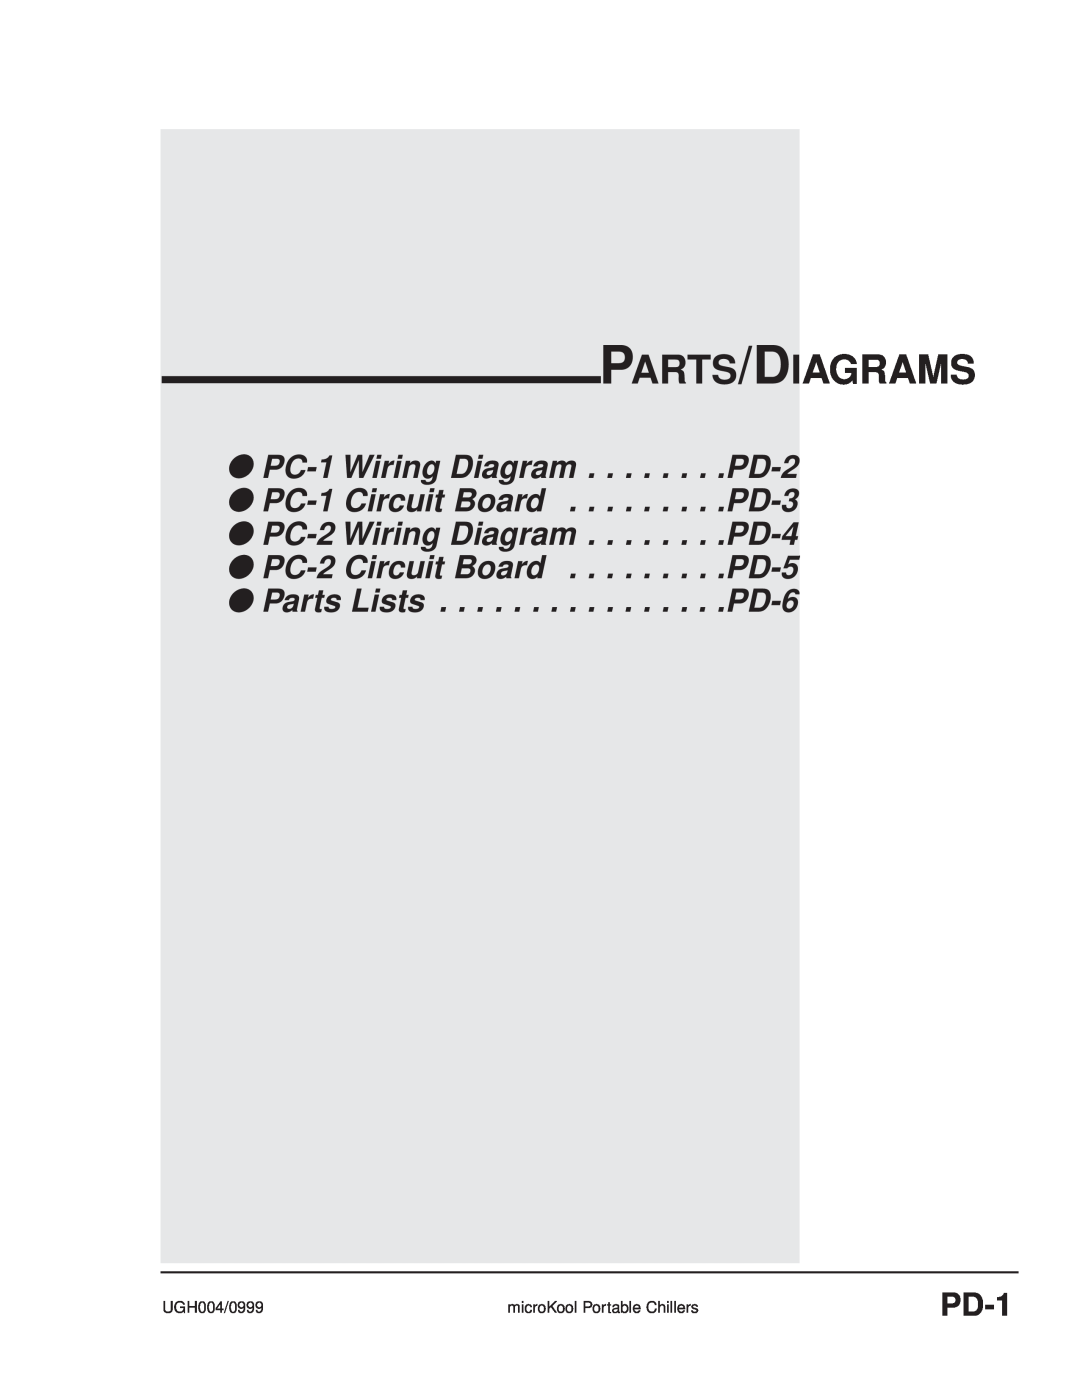 Conair MPW, MPA Parts/Diagrams, PC-1 Wiring Diagram . . . . . . . .PD-2, PC-1 Circuit Board . . . . . . . . .PD-3, PD-1 